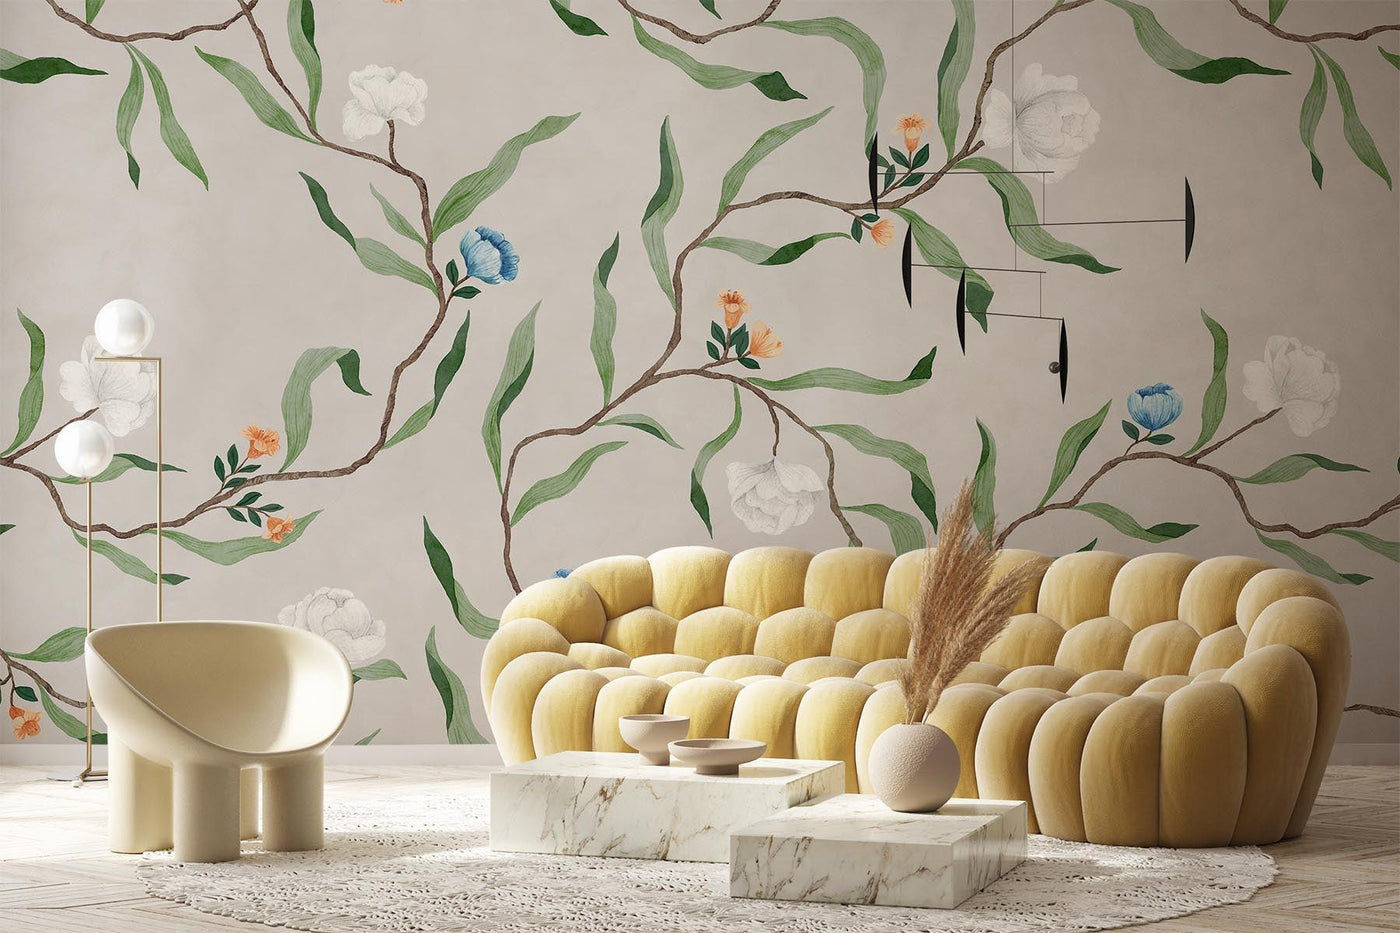 10 Amazing Dark Floral Wallpaper Ideas for An Aesthetic Interior Design